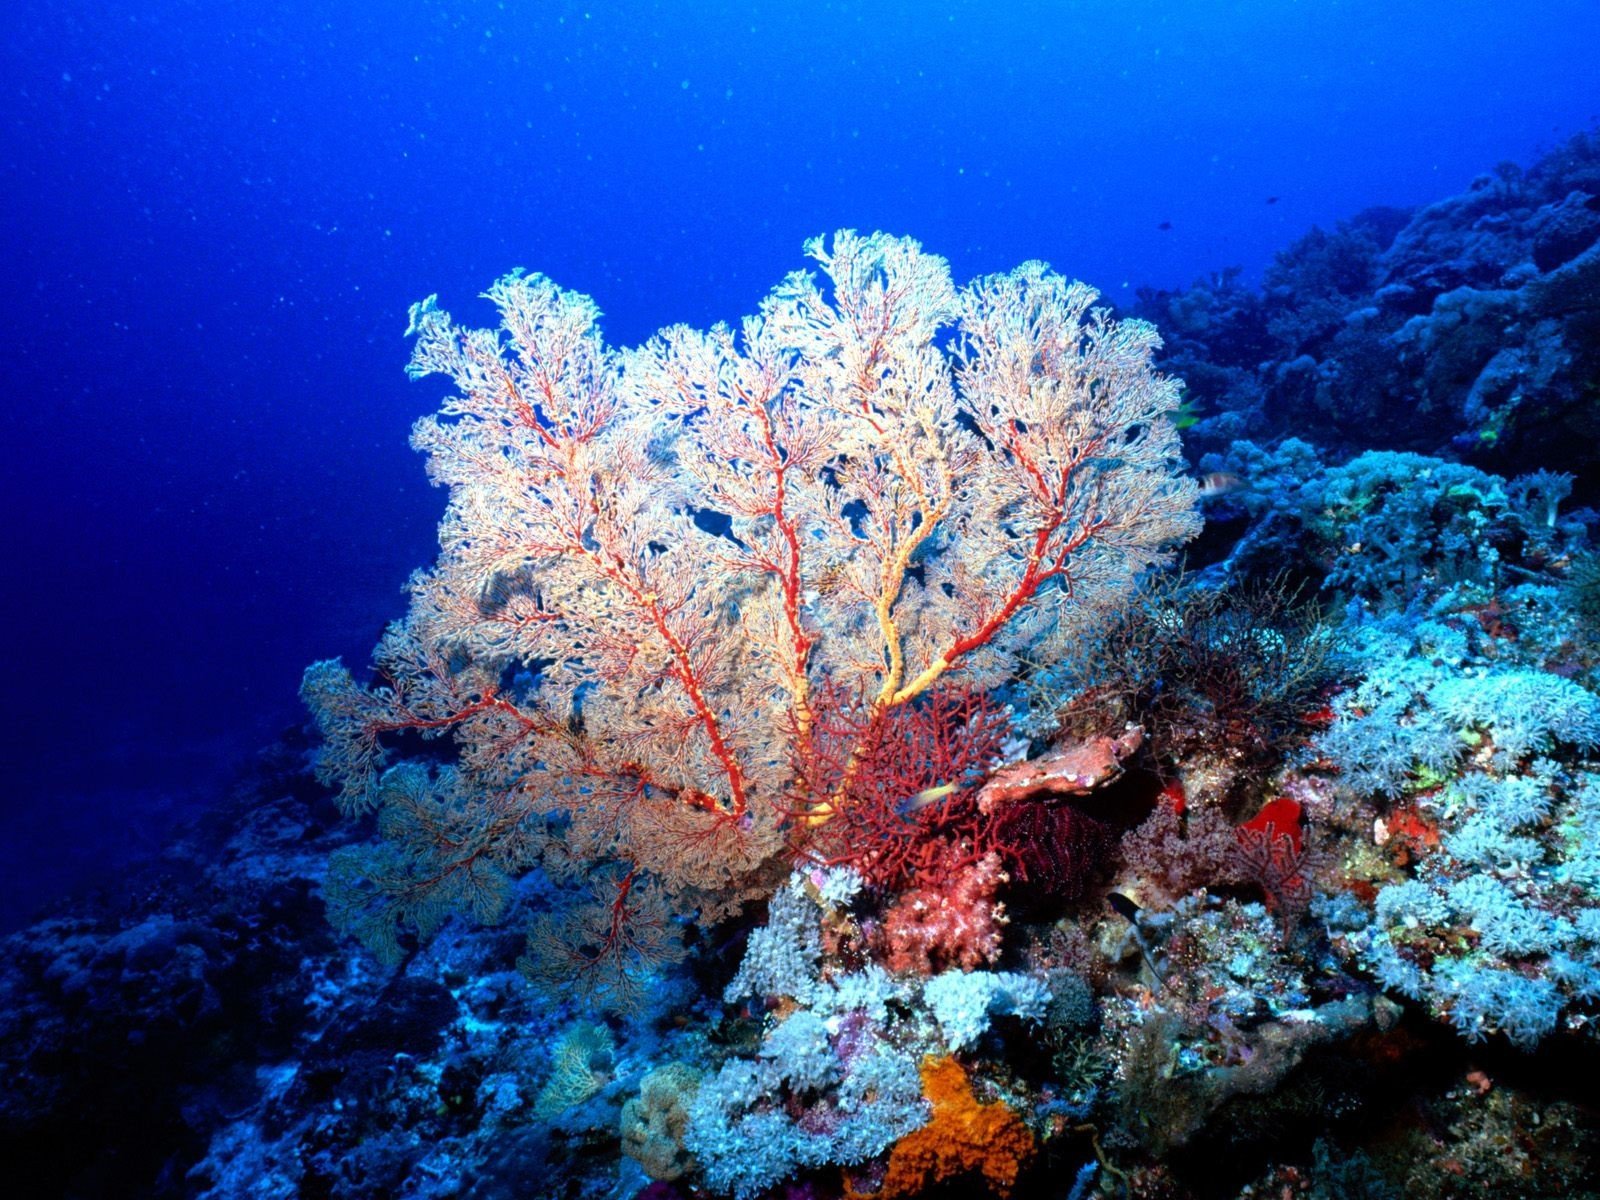 Coral video. Риф коралловый 54546. Карибское море коралловые полипы. Коралловые рифы красного моря. Коралловые полипы Атлантического океана.